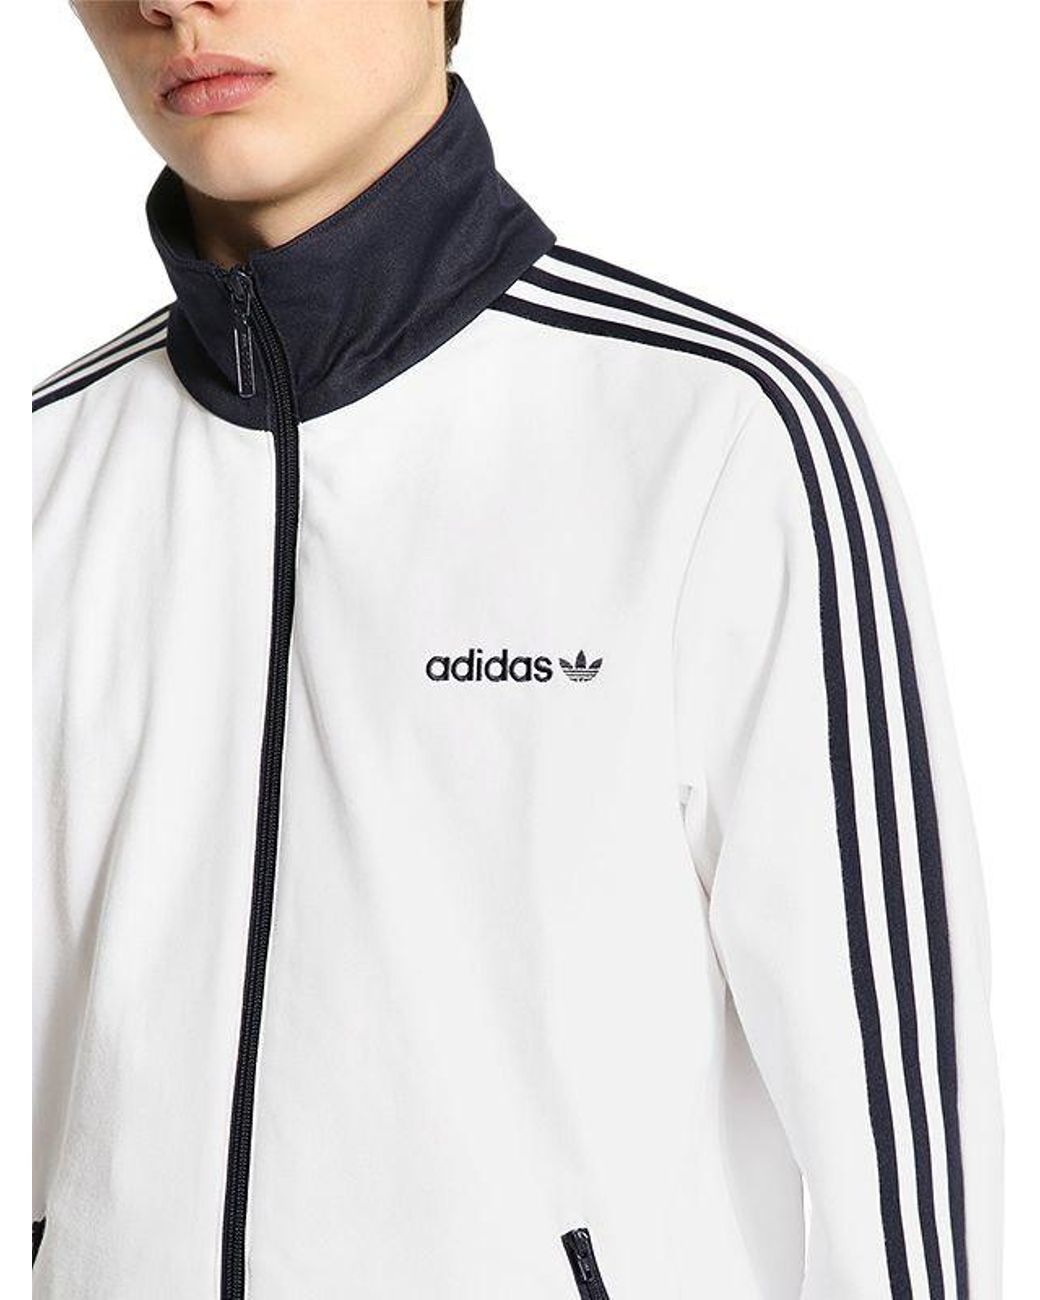 adidas Originals Bb Track Jacket in White for Men | Lyst